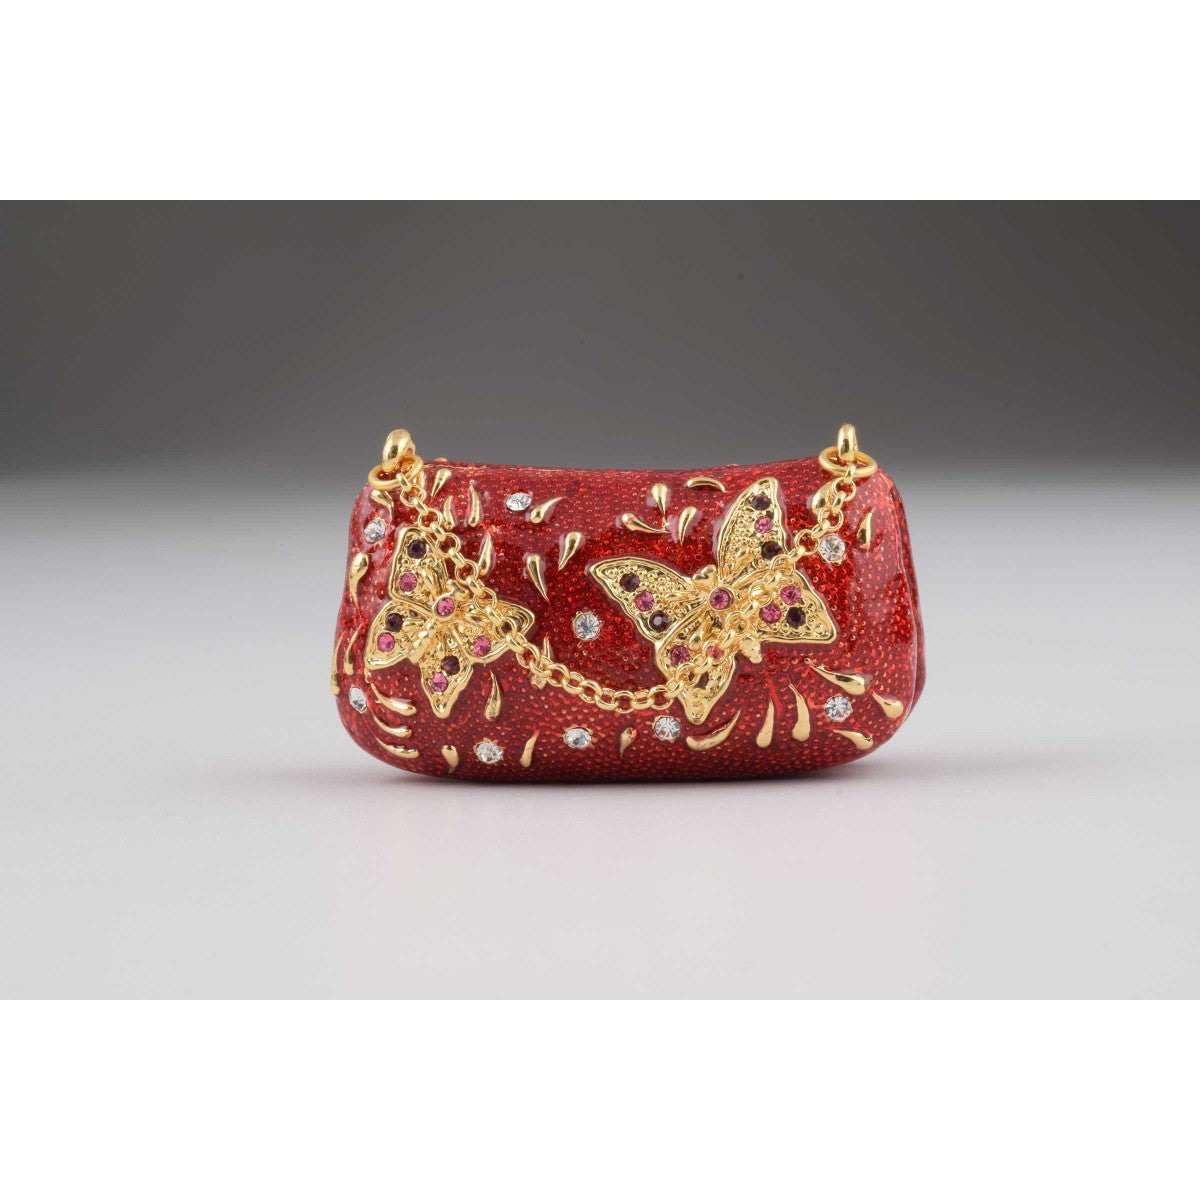 Red Handbag Faberge Styled Trinket Box by Keren Kopal